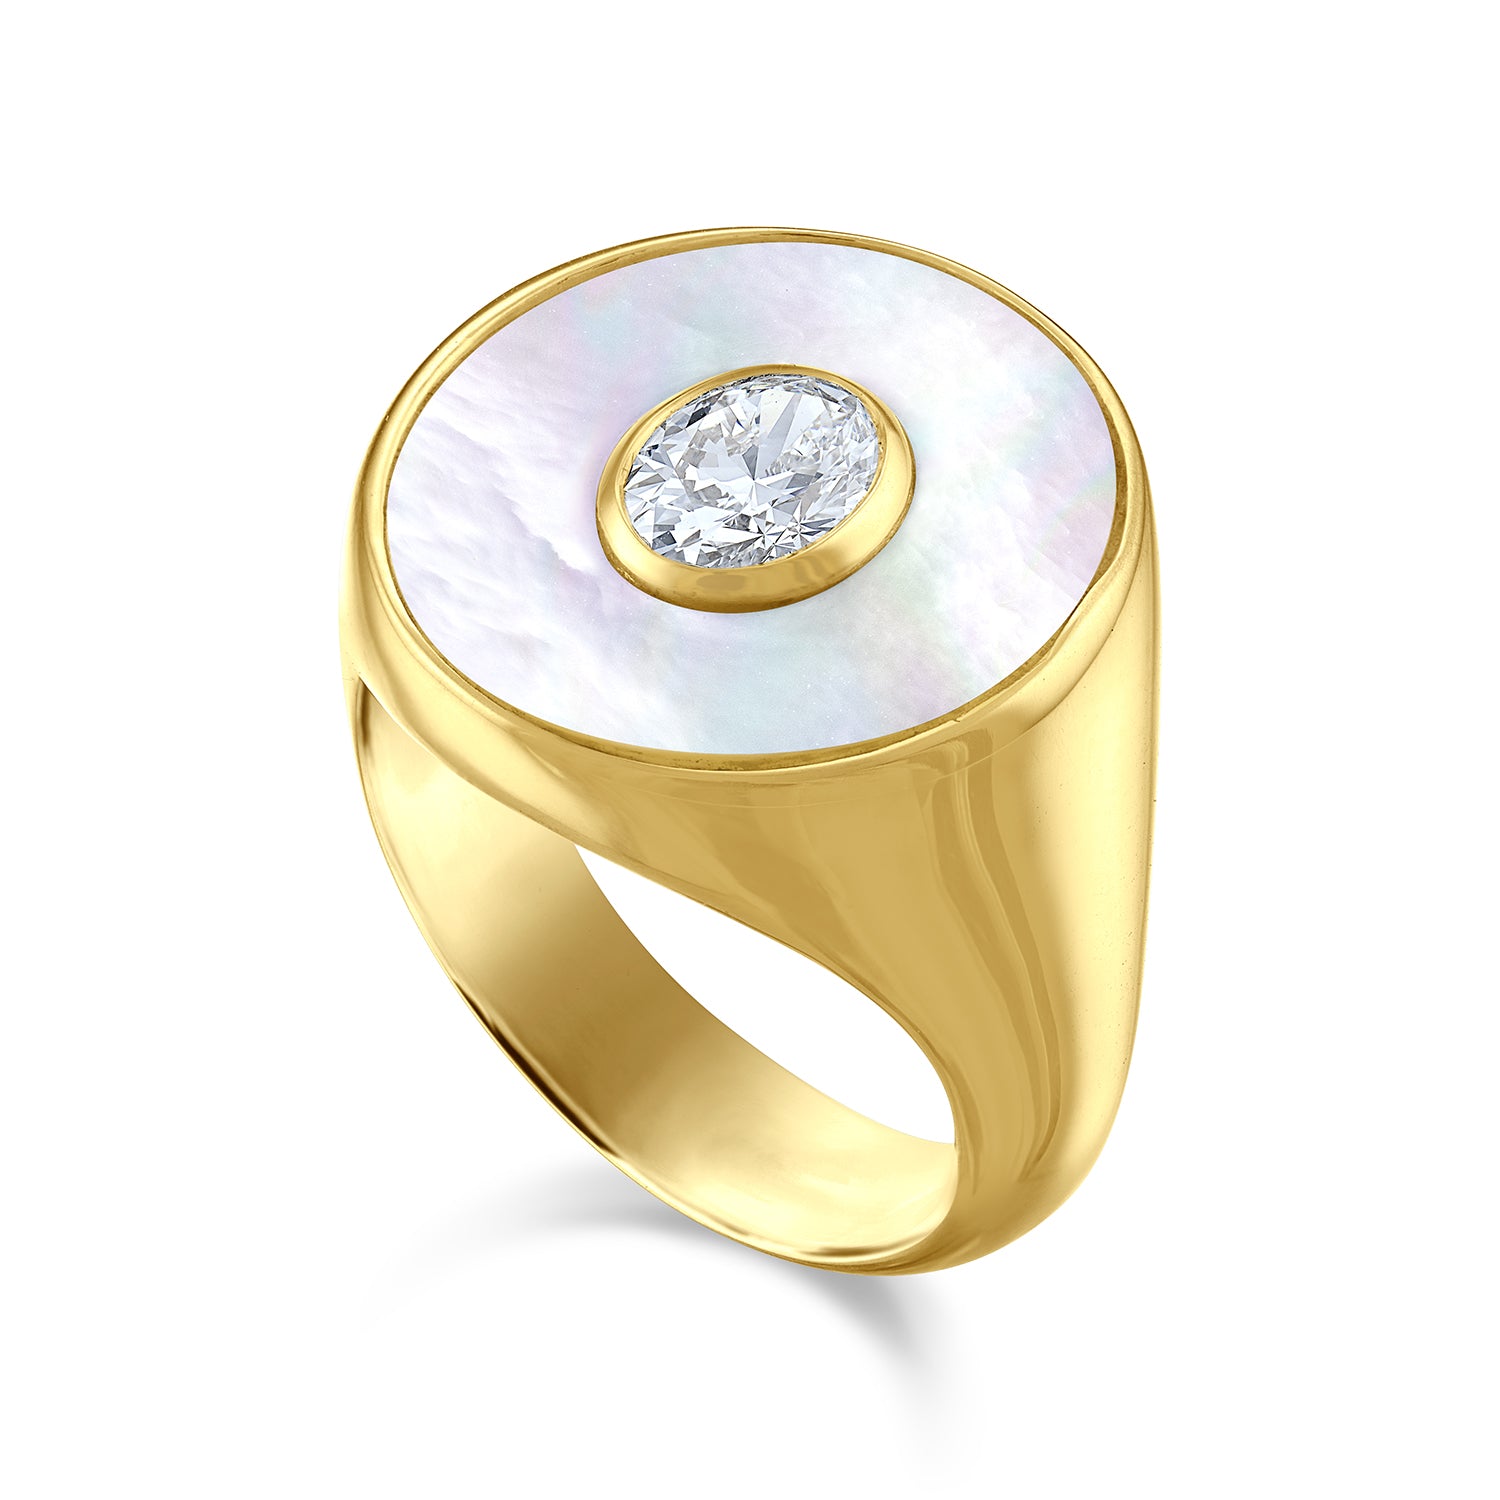 Gold emblem ring